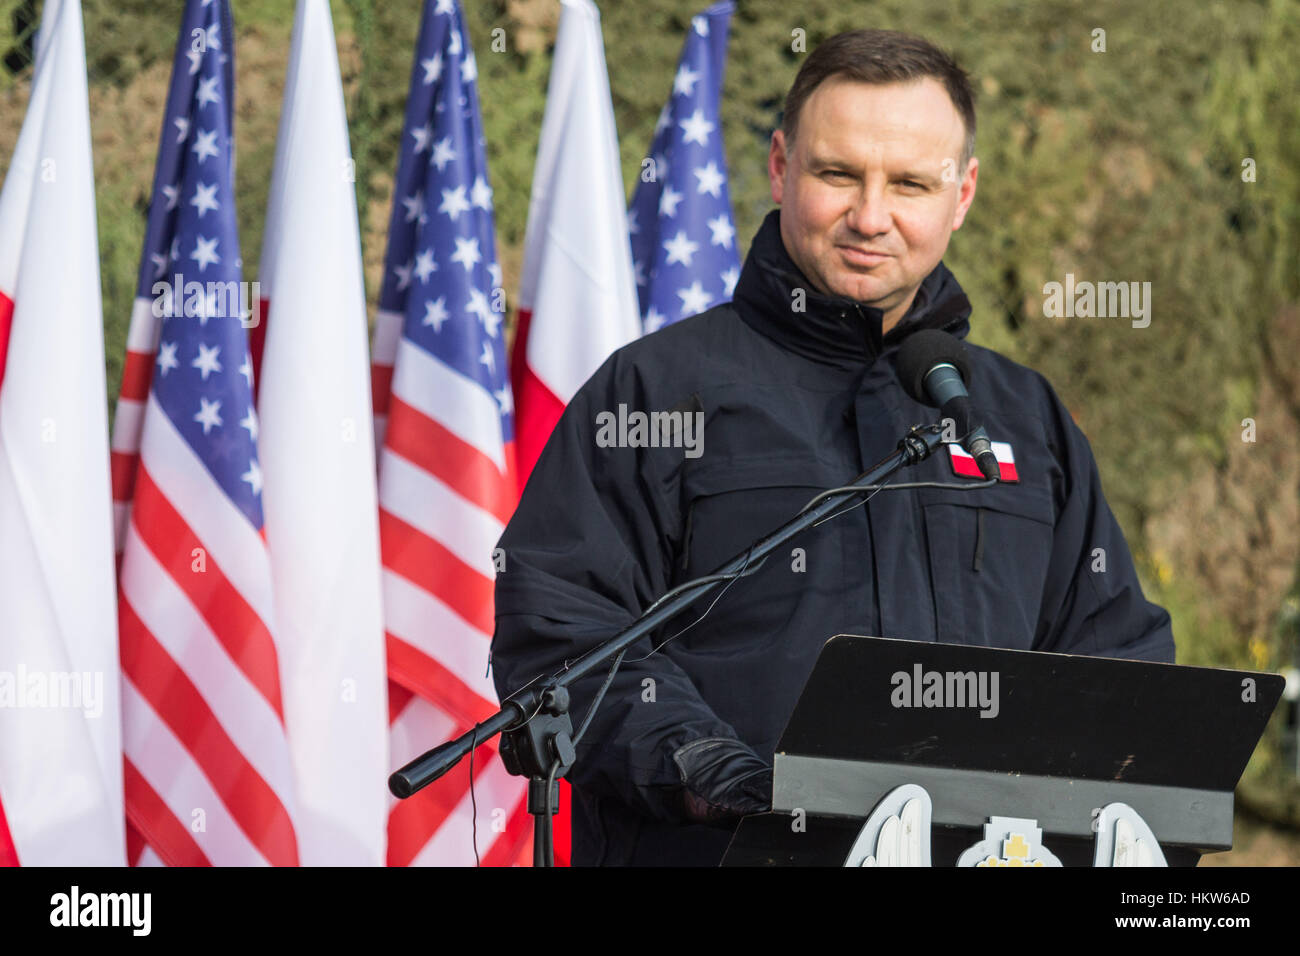 Zagan, Poland. 30th Jan, 2017 President of Poland Andrzej Duda on Polish and U.S. exercise on training fields Credit: Krzysztof Kaniewski/Alamy Live News Stock Photo